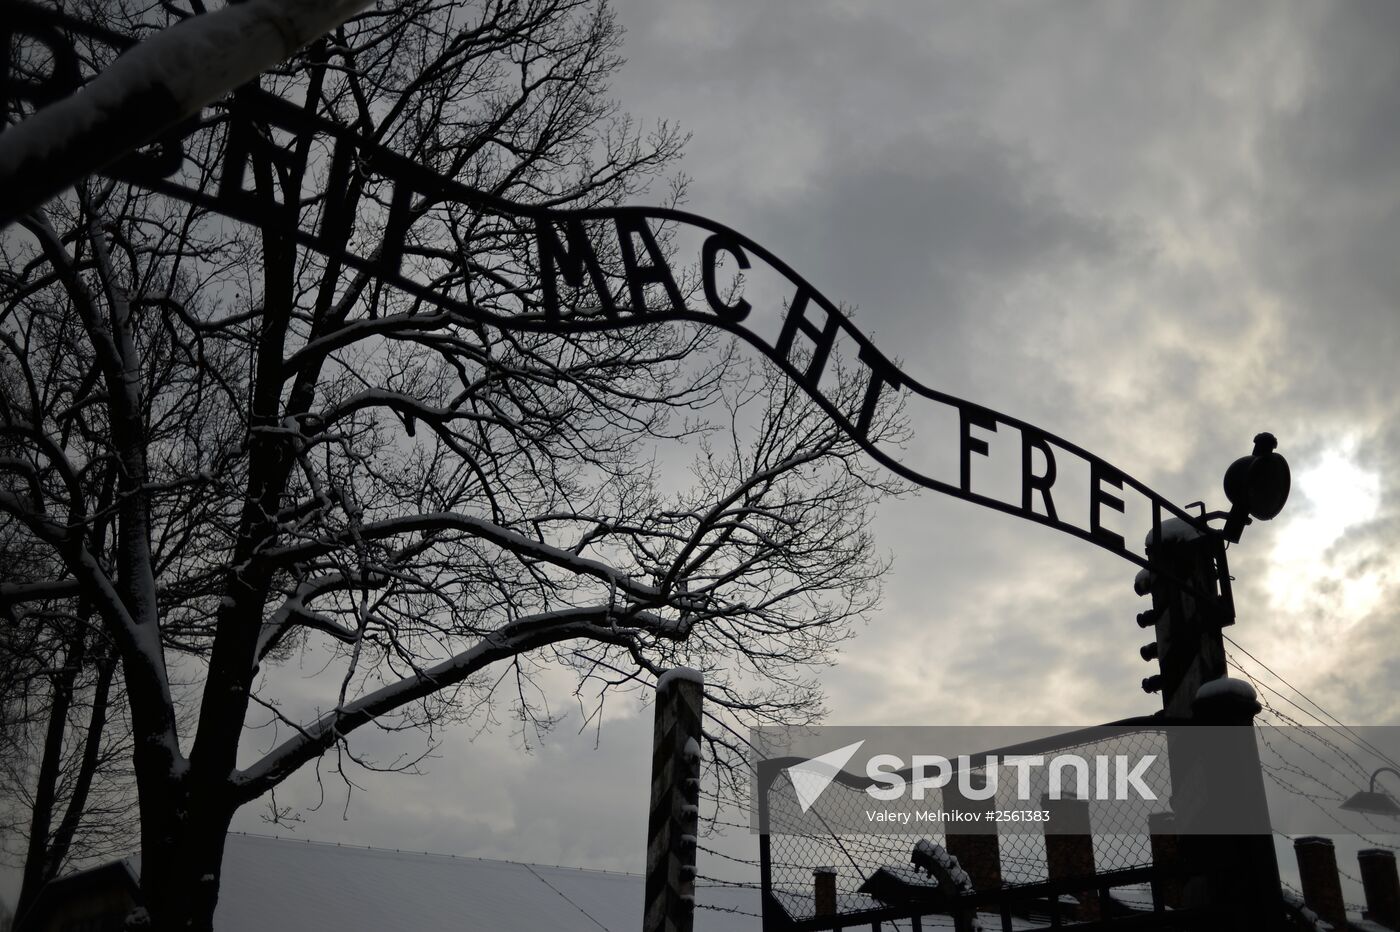 Former concentration camp prisoners visit Auschwitz-Birkenau Museum